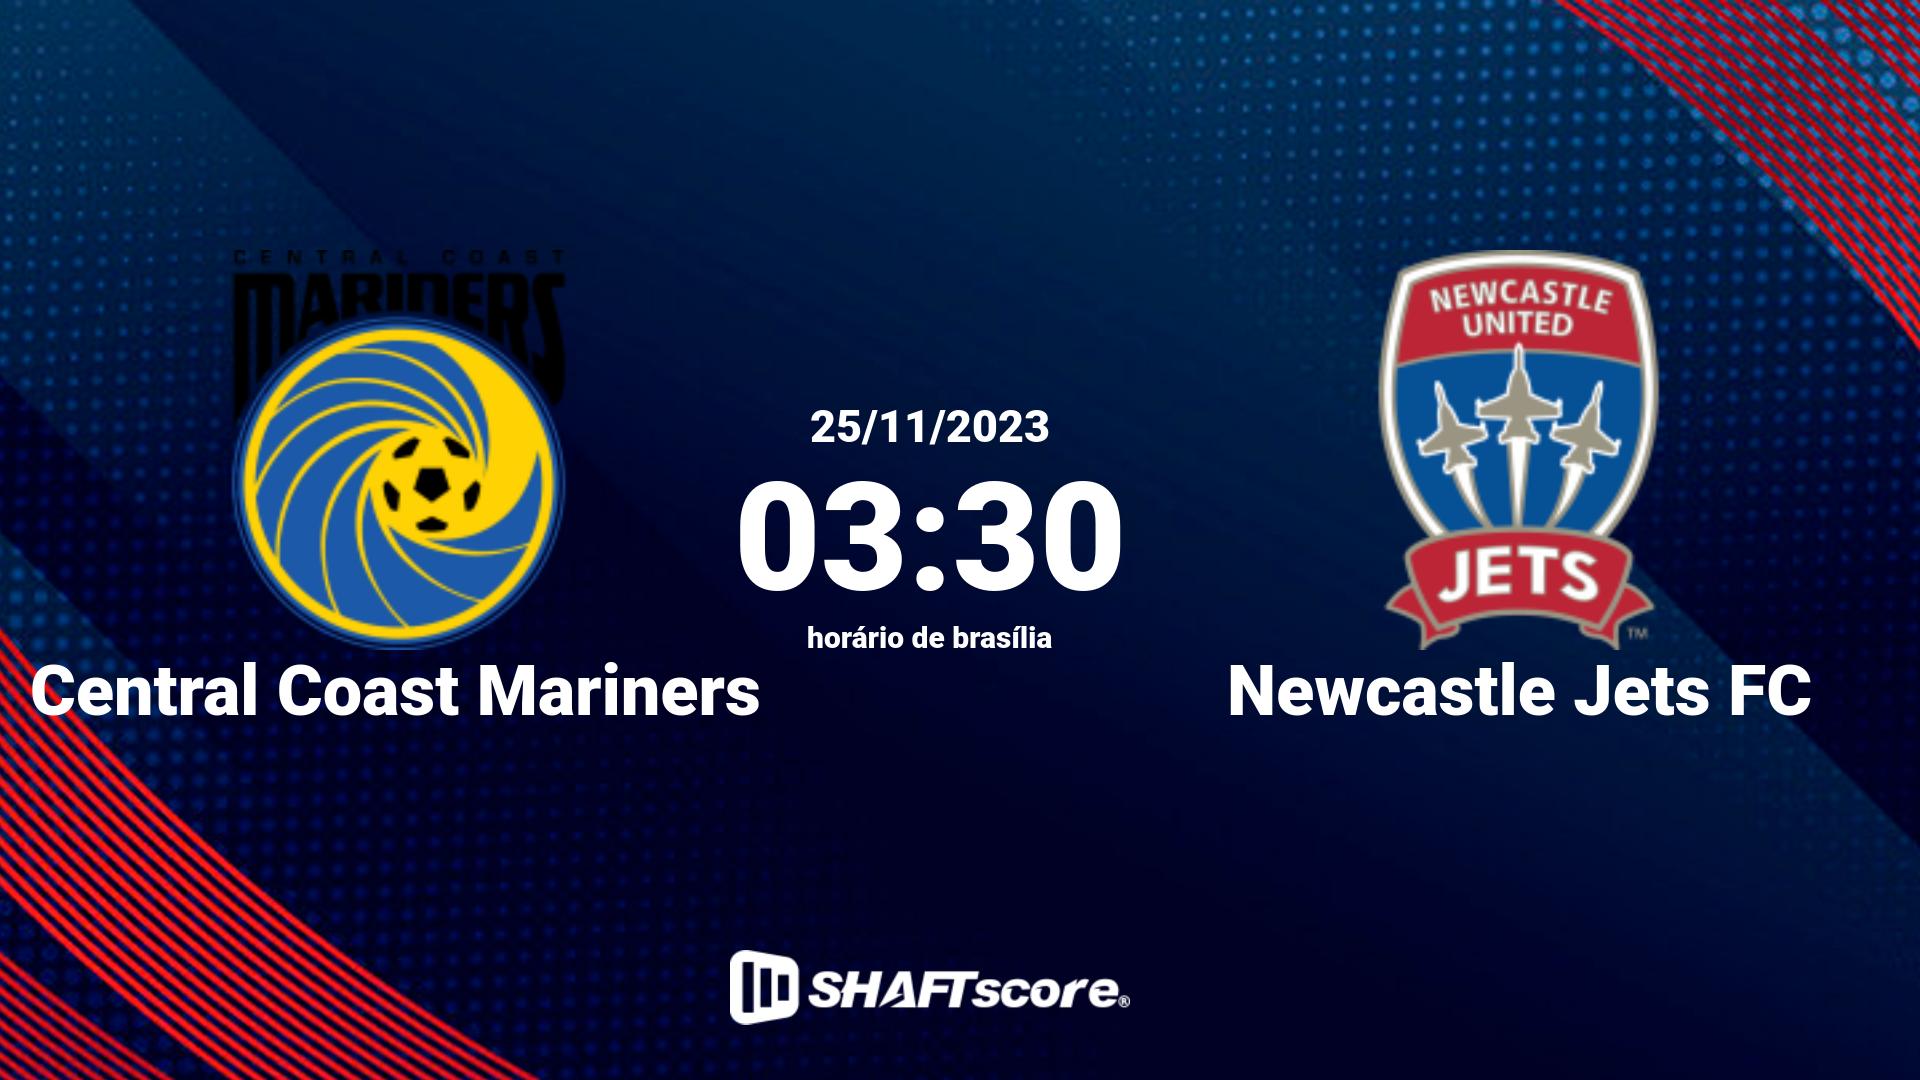 Estatísticas do jogo Central Coast Mariners vs Newcastle Jets FC 25.11 03:30